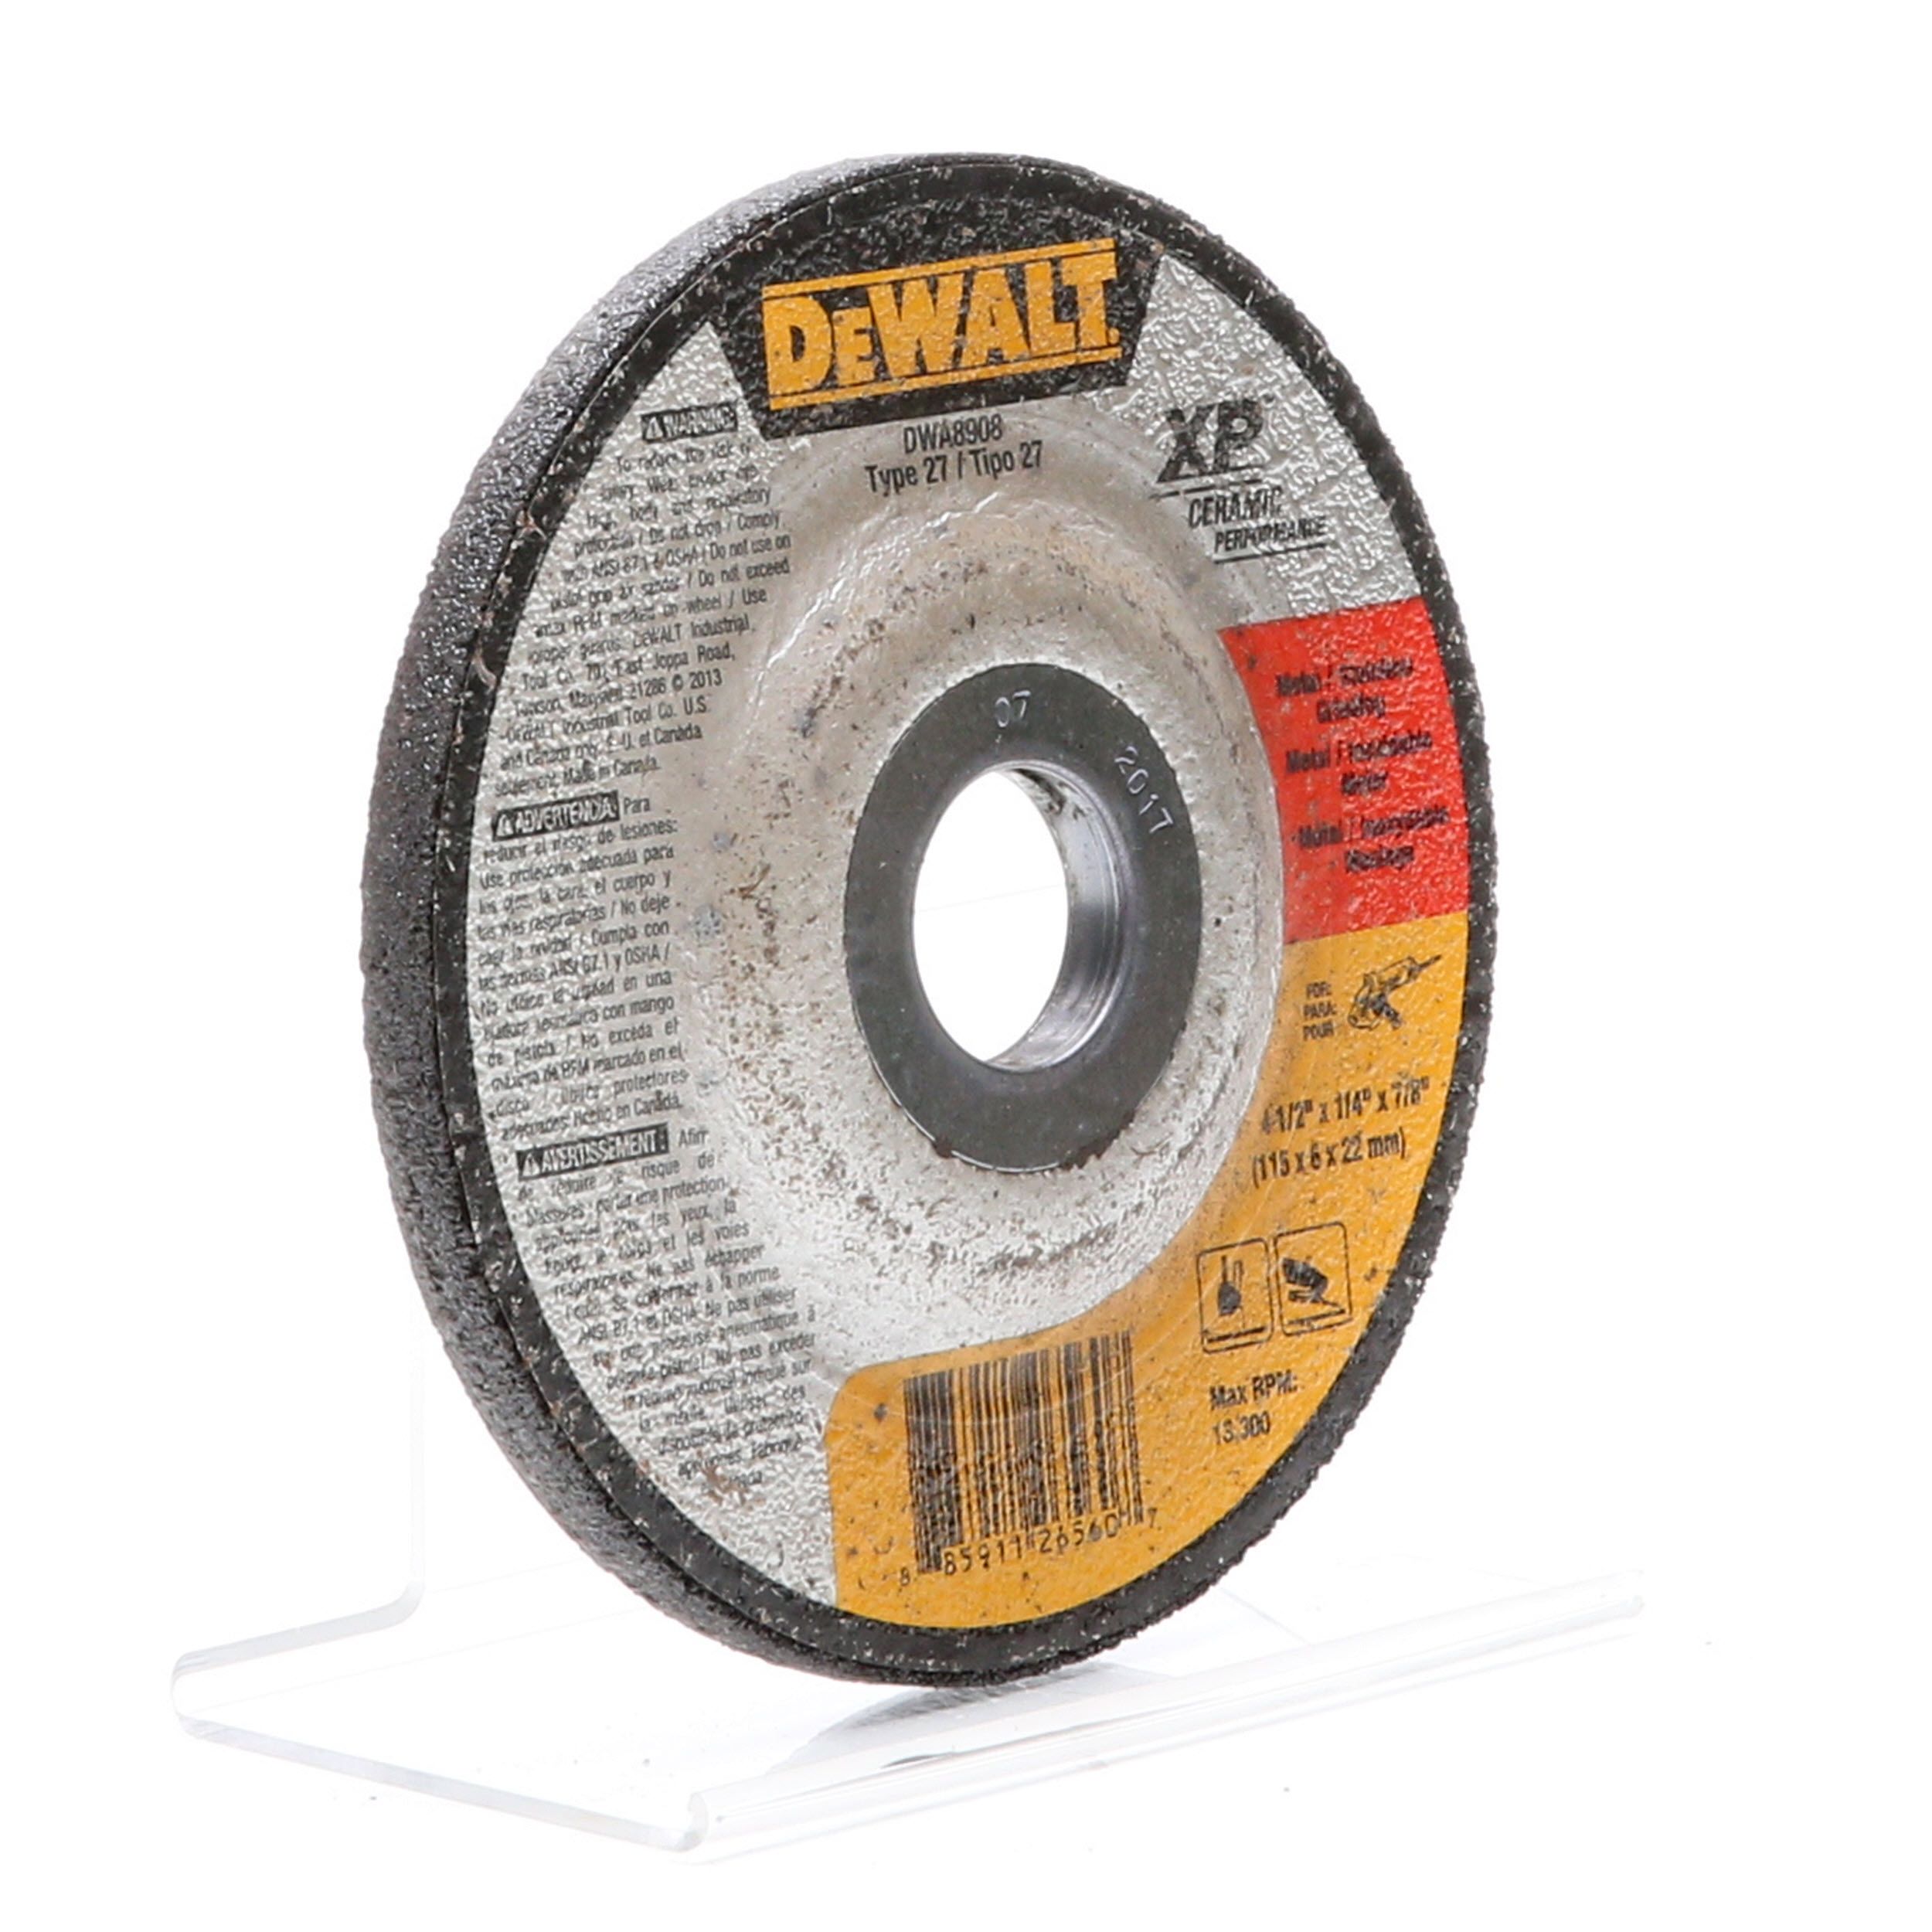 Details about   Dewalt DWA8909  41/2 x 1/4 Type 27 XP Ceramic Grinding Disc 